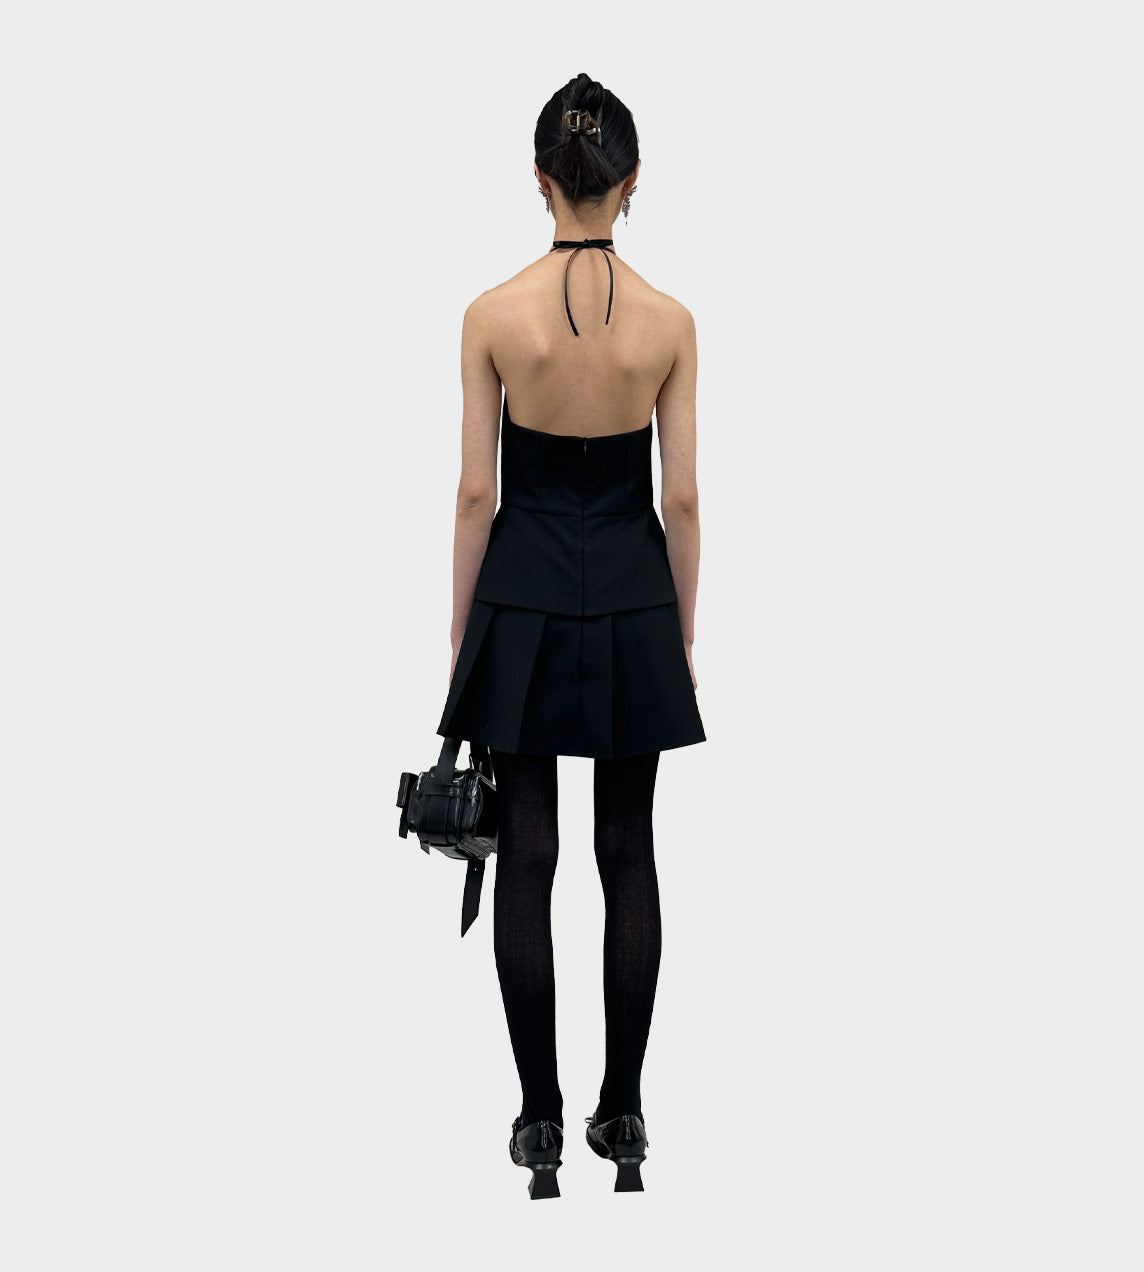 ShuShu/Tong - Crystal Detail Halter Dress Black